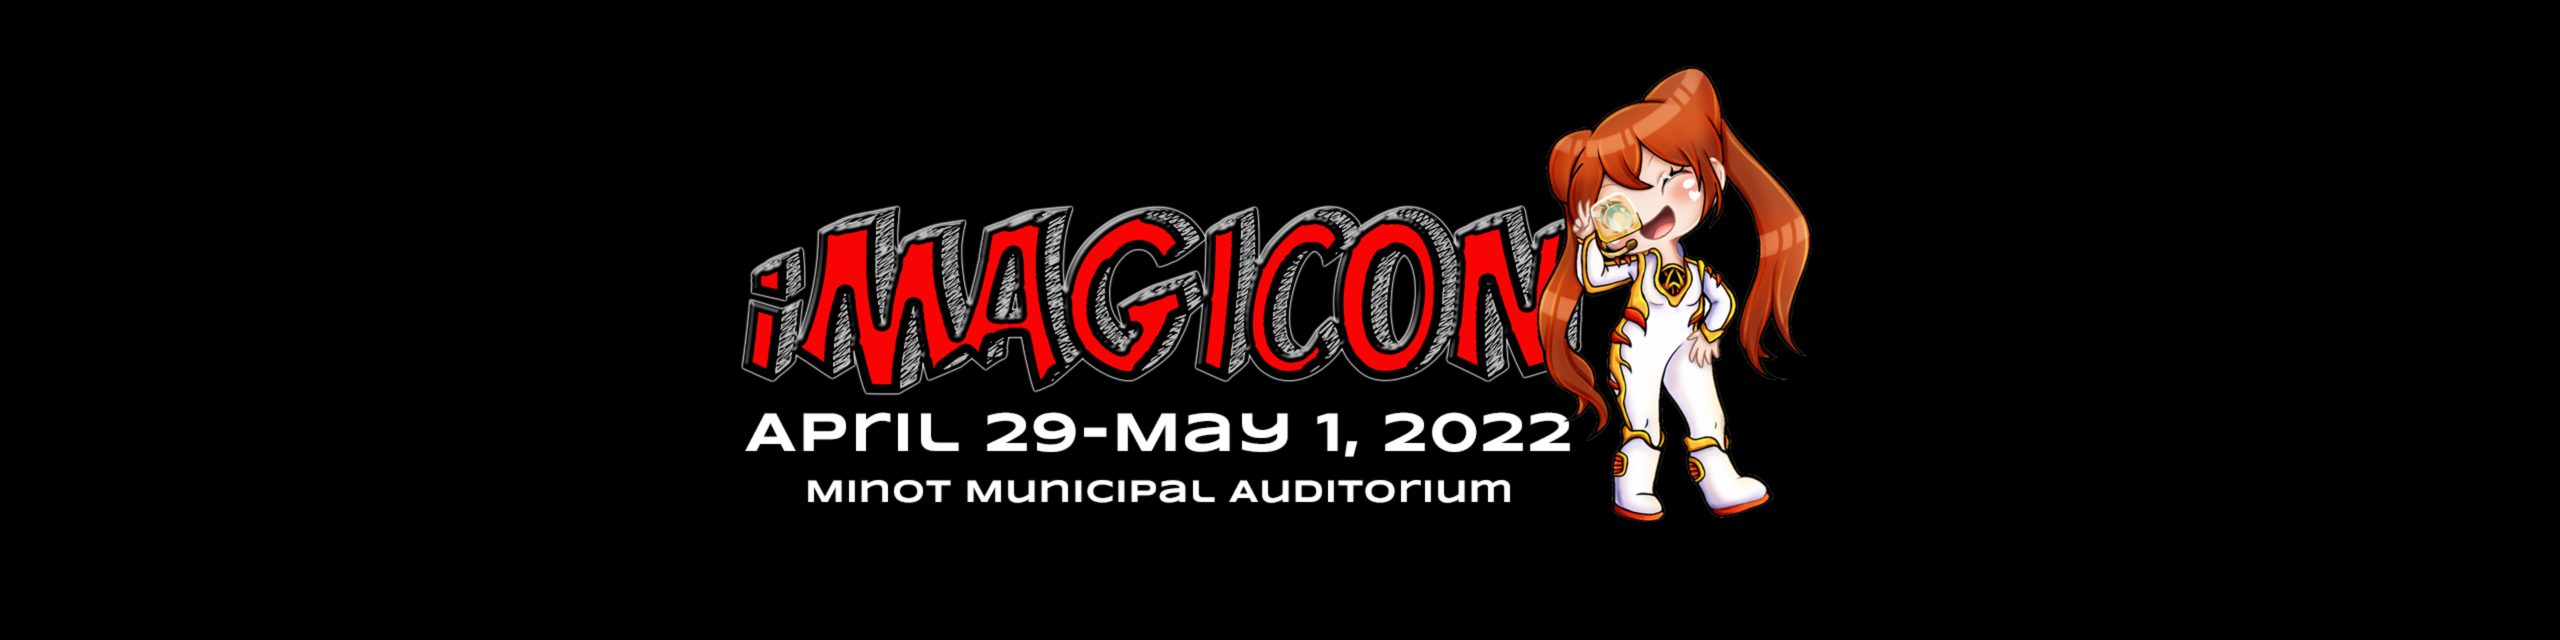 iMagicon image banner 2022